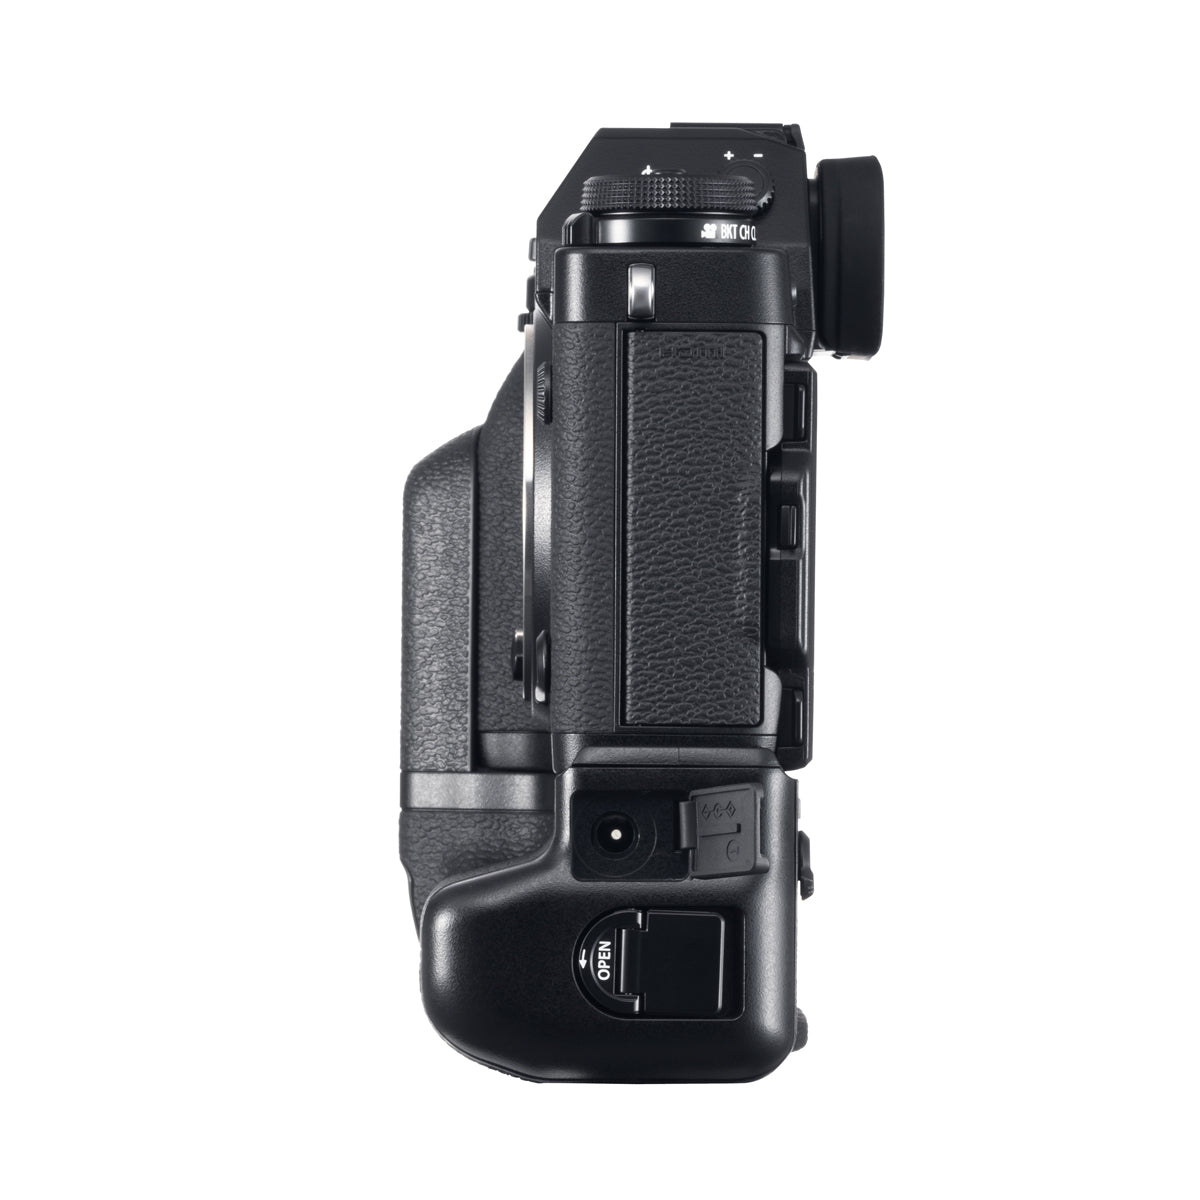 Fujifilm X-T3 Digital Camera Body (Black)